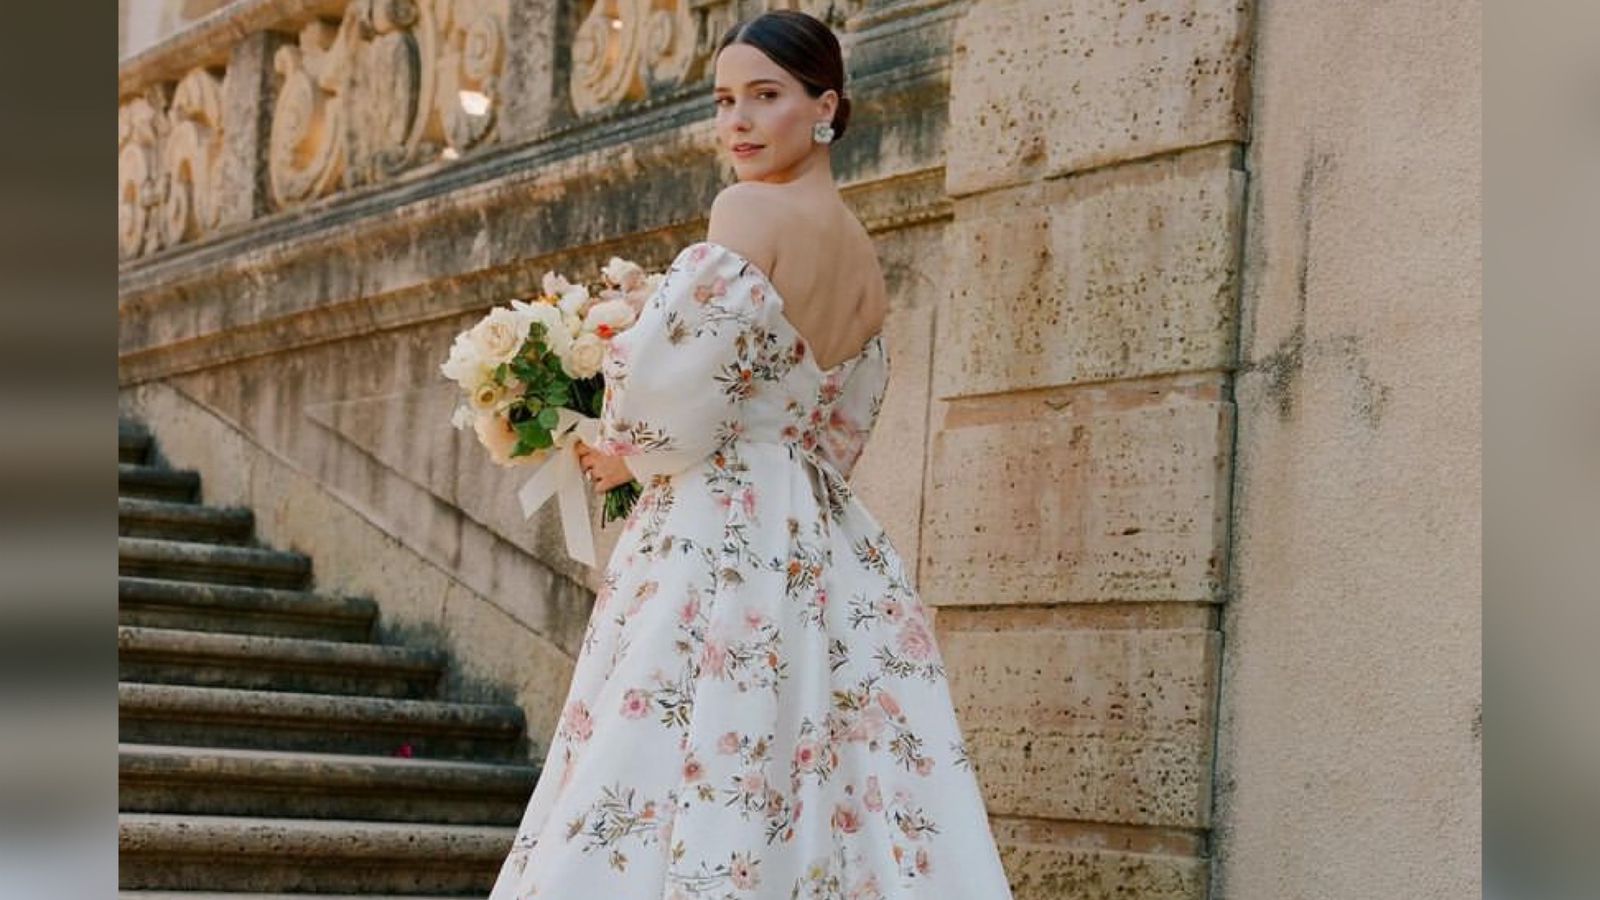 Sophia Bush Shares Details of Her Unique Personalized Wedding Dress